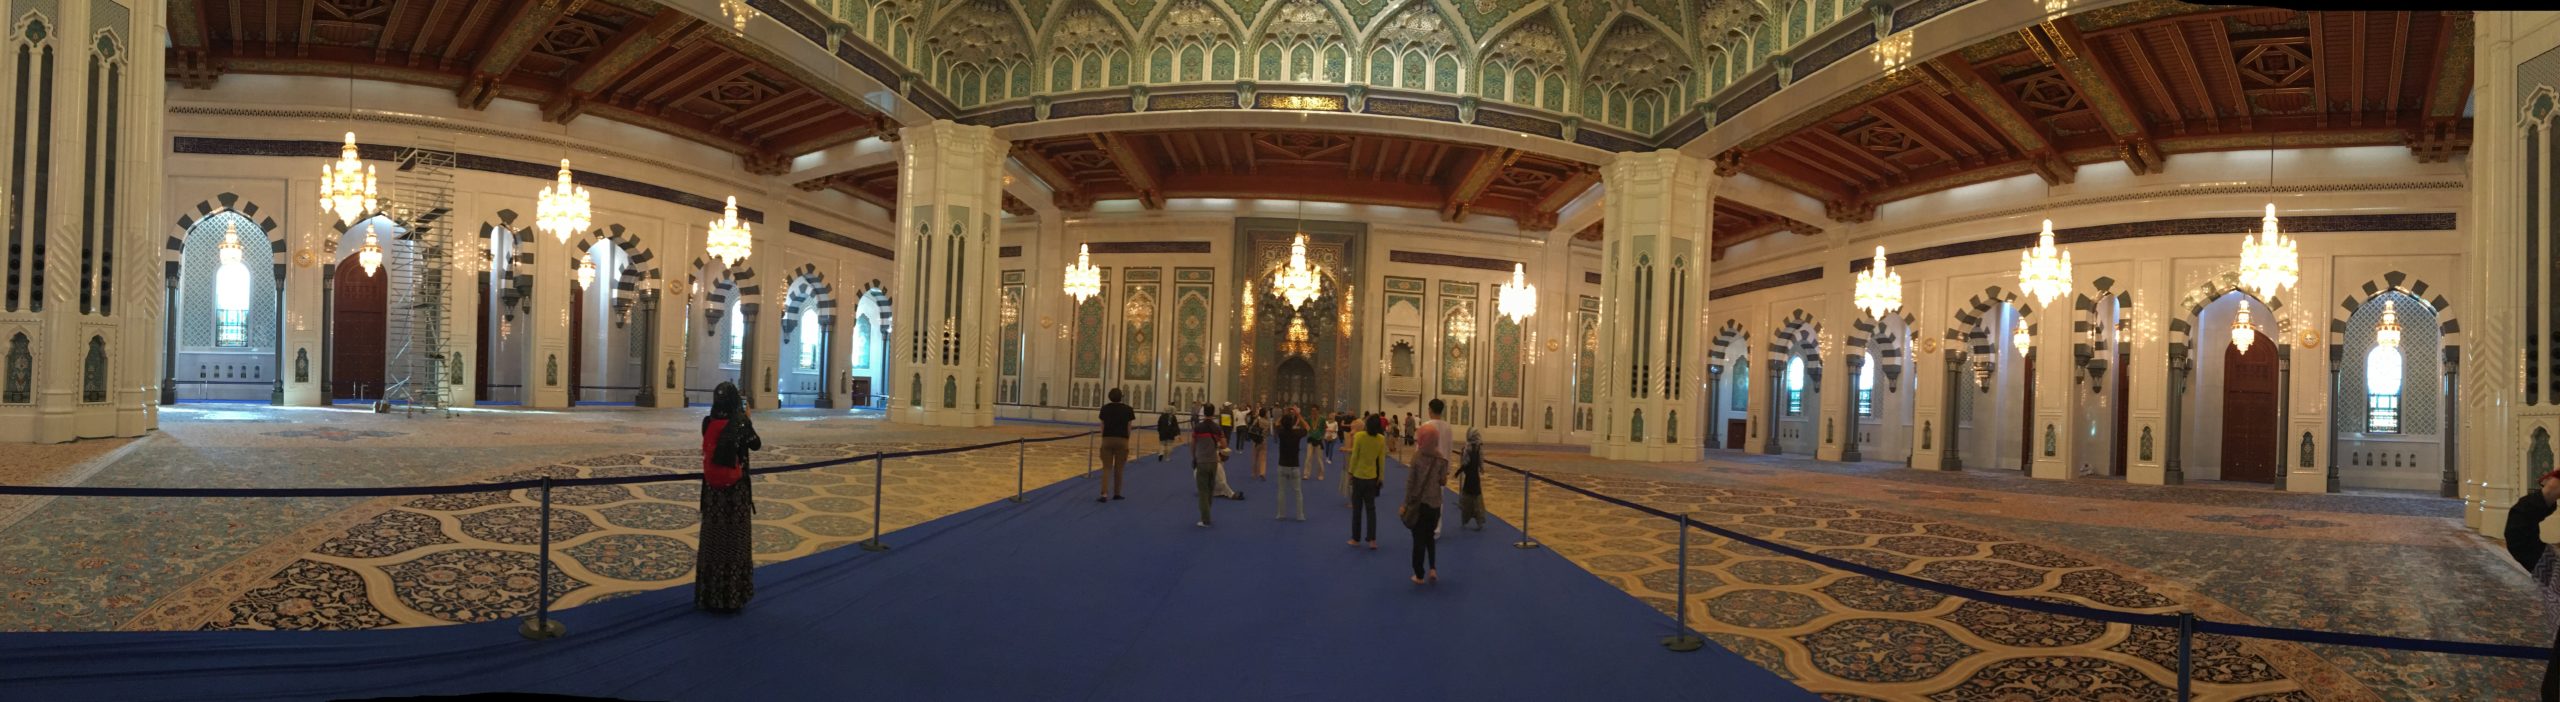 Main Musalla of Sultan Qaboos Grand Mosque